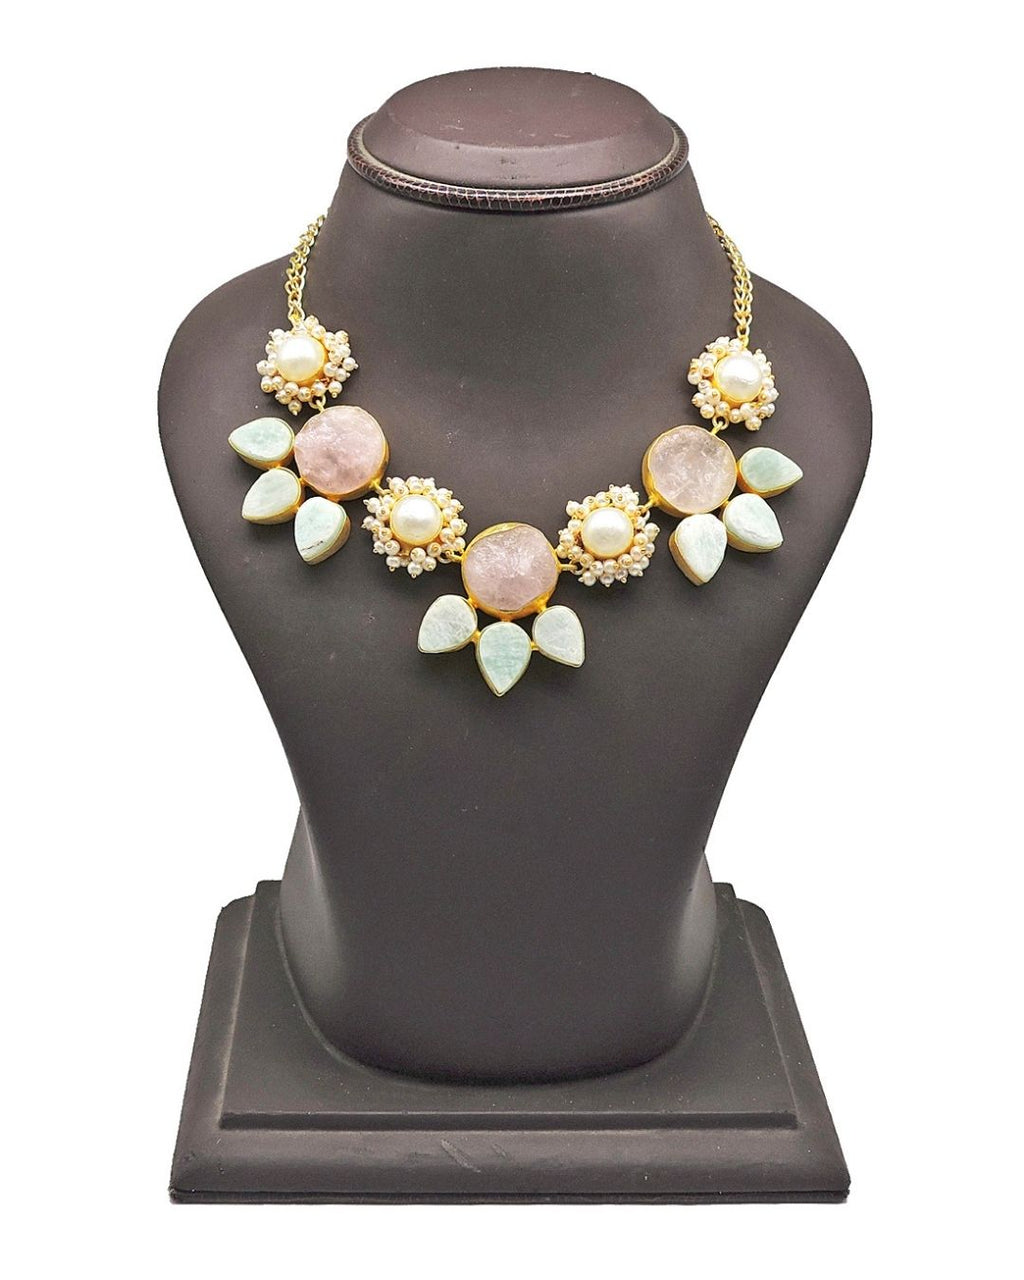 Capri Necklace - Necklaces - Handcrafted Jewellery - Made in India - Dubai Jewellery, Fashion & Lifestyle - Dori